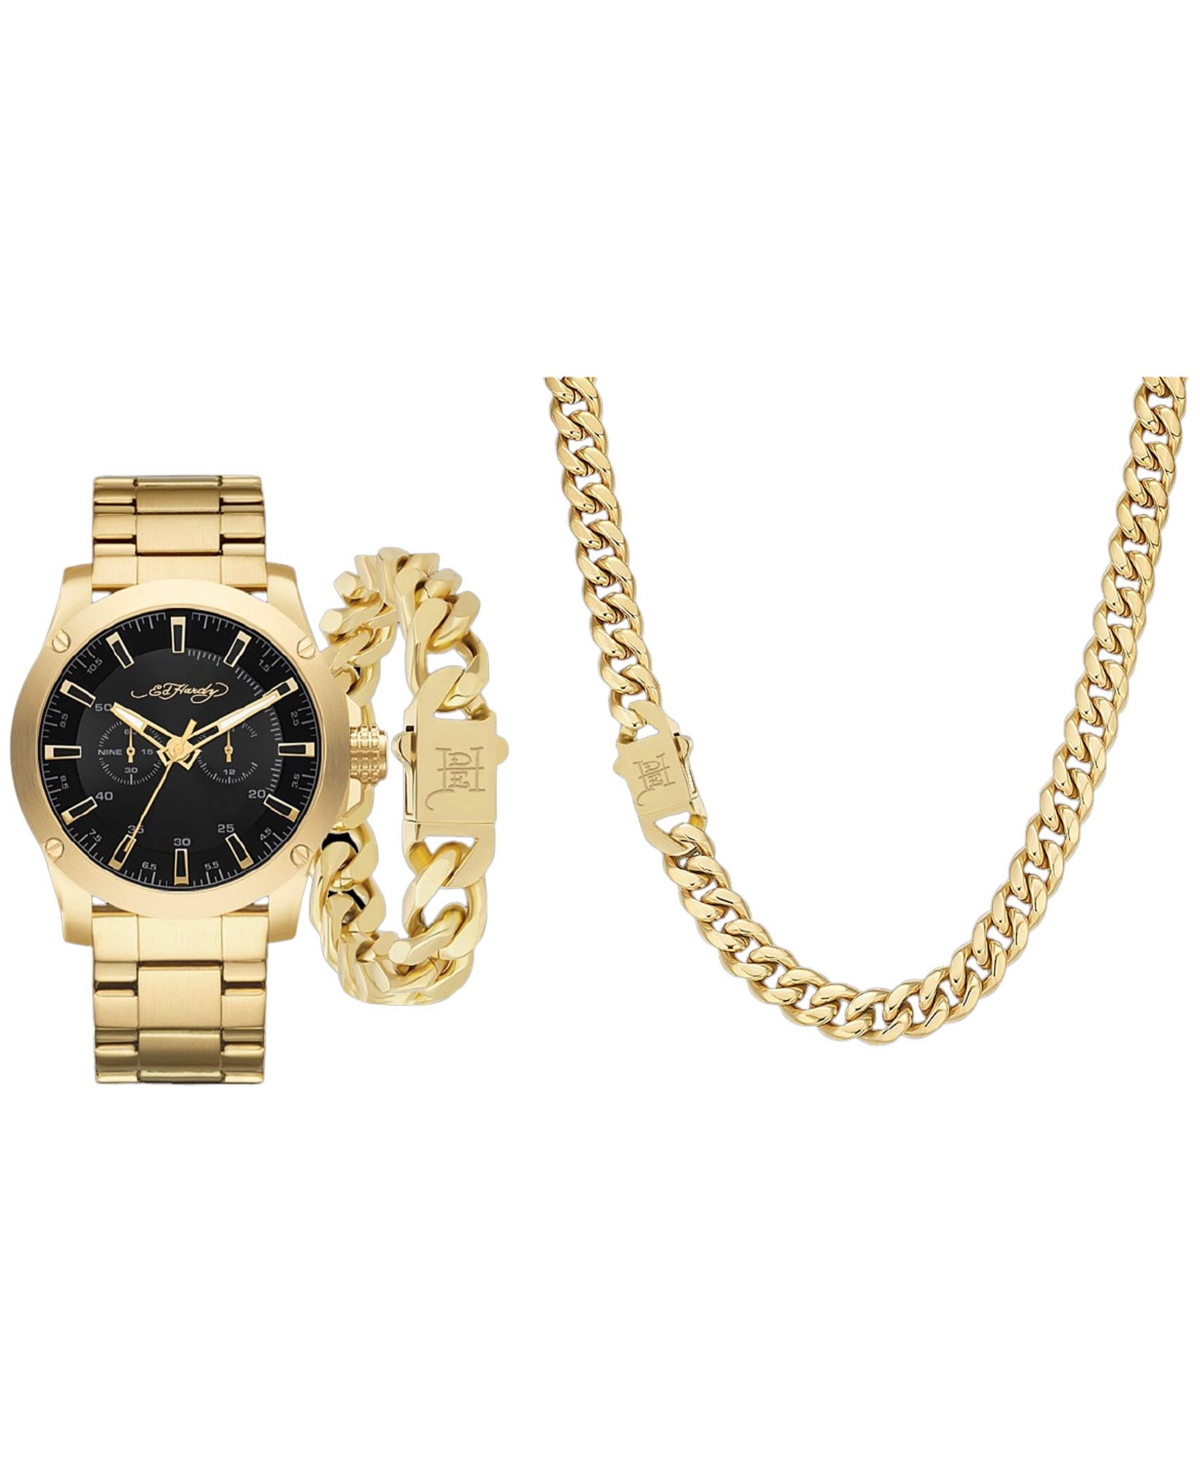 Men's Shiny Gold-Tone Metal Bracelet Watch 46mm Gift Set - Matte Black, Shiny Gold-Tone